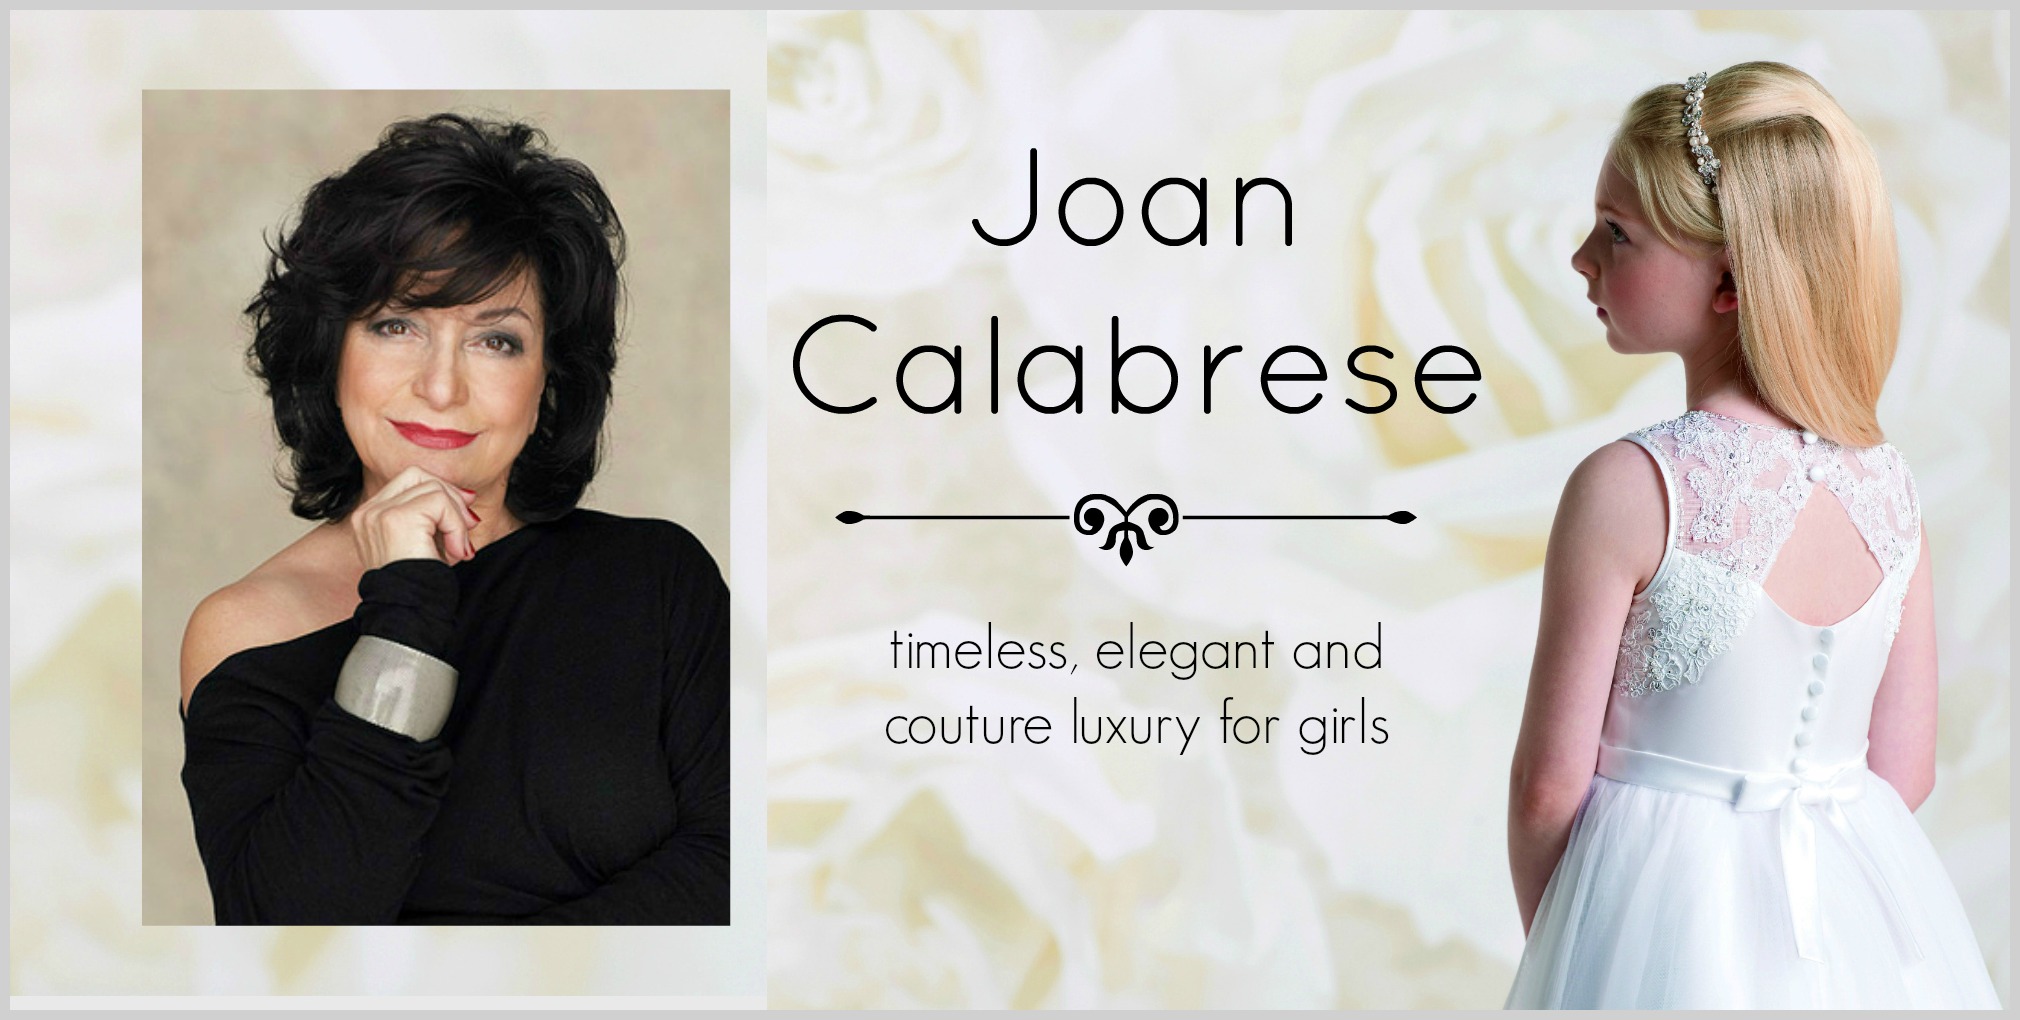 Joan Calabrese dresses